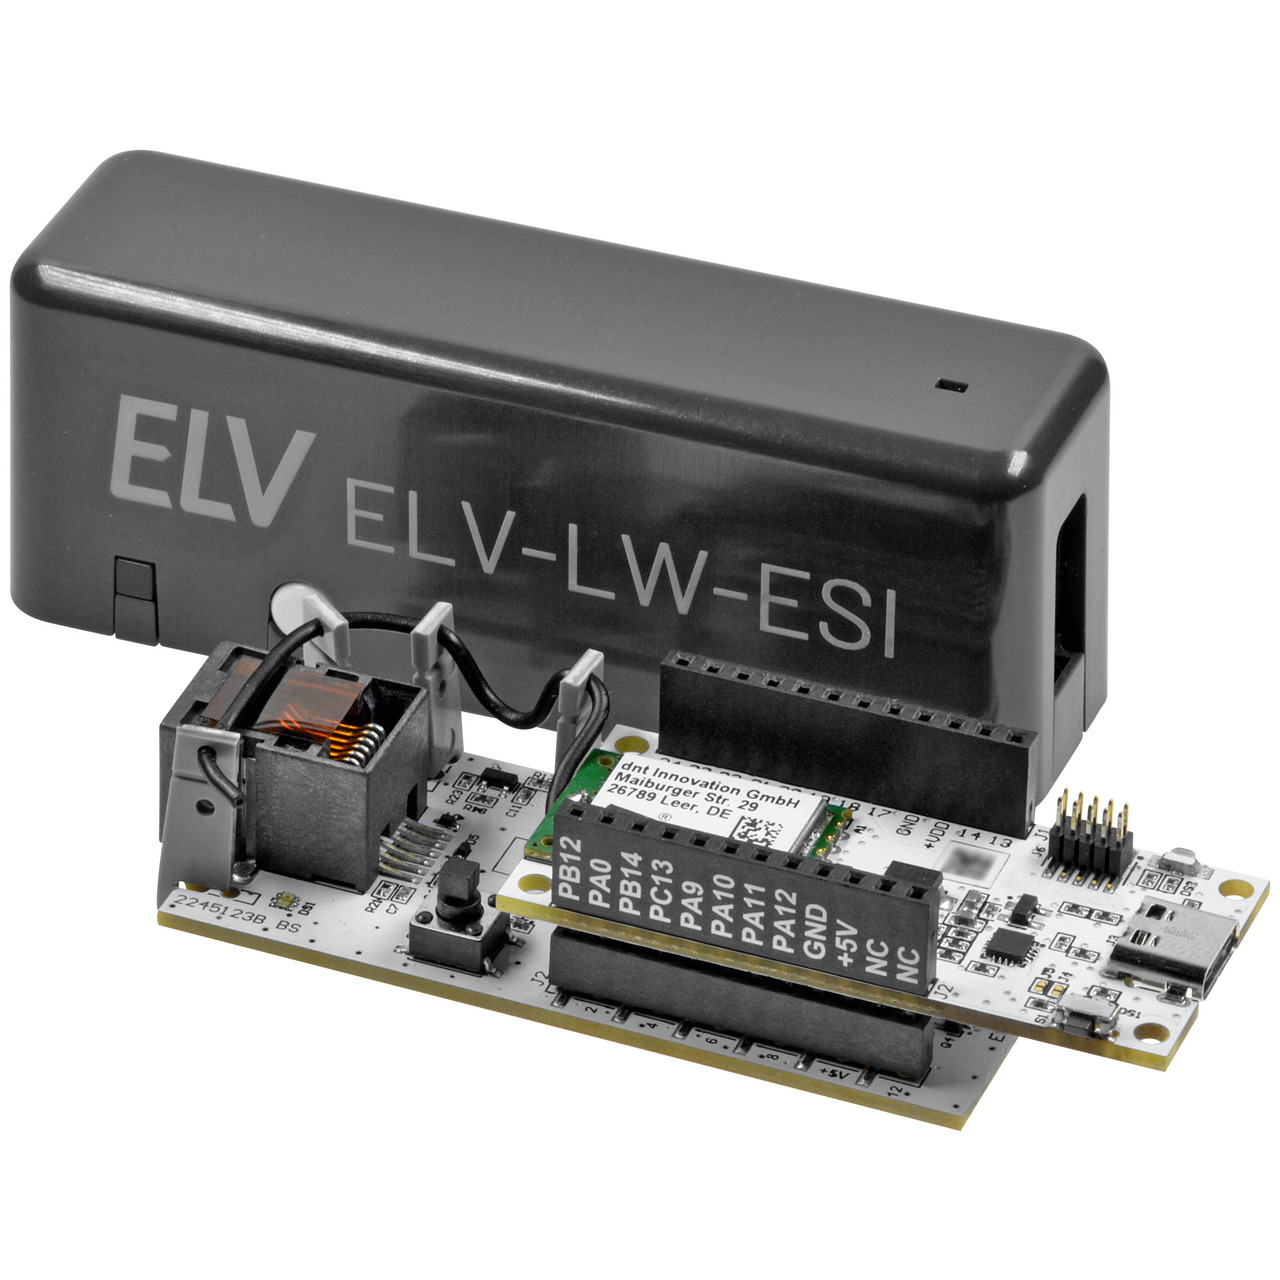 ELV Bausatz LoRaWAN(R) Energiezähler-Sensorschnittstelle- ELV-LW-ESI